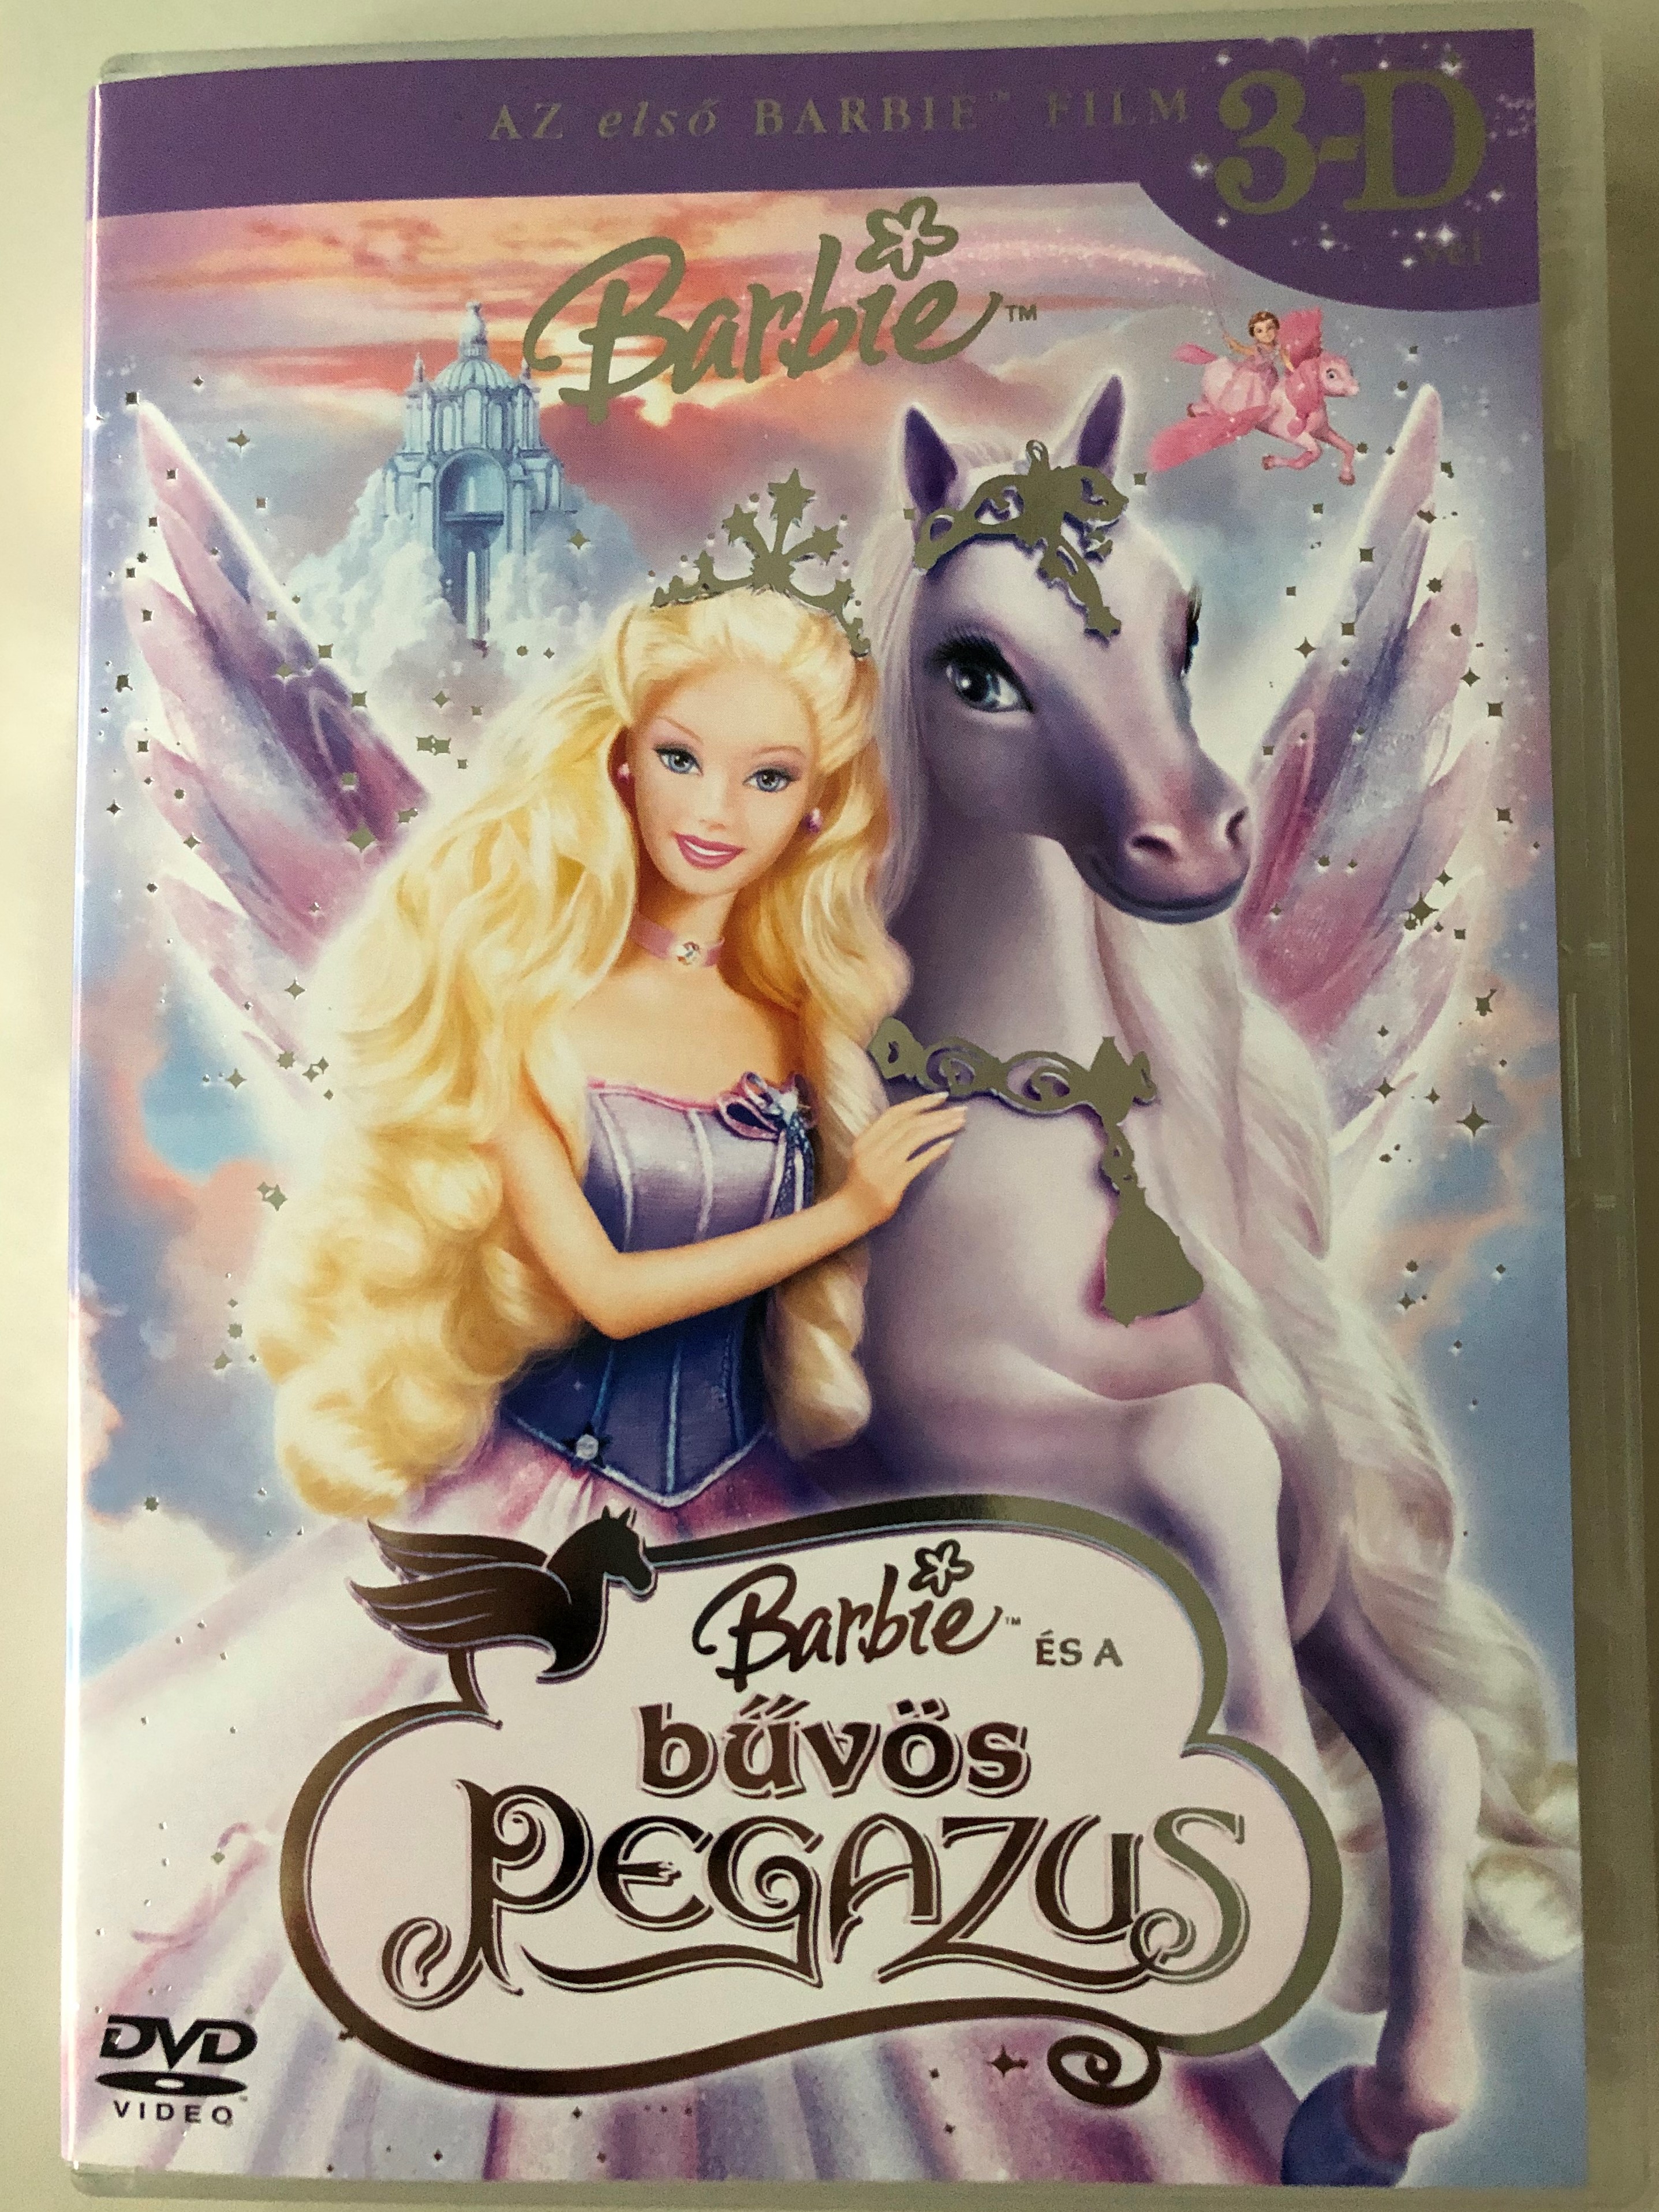 barbie-and-the-magic-of-pegasus-dvd-2005-barbie-s-a-b-v-s-pegazus-1.jpg